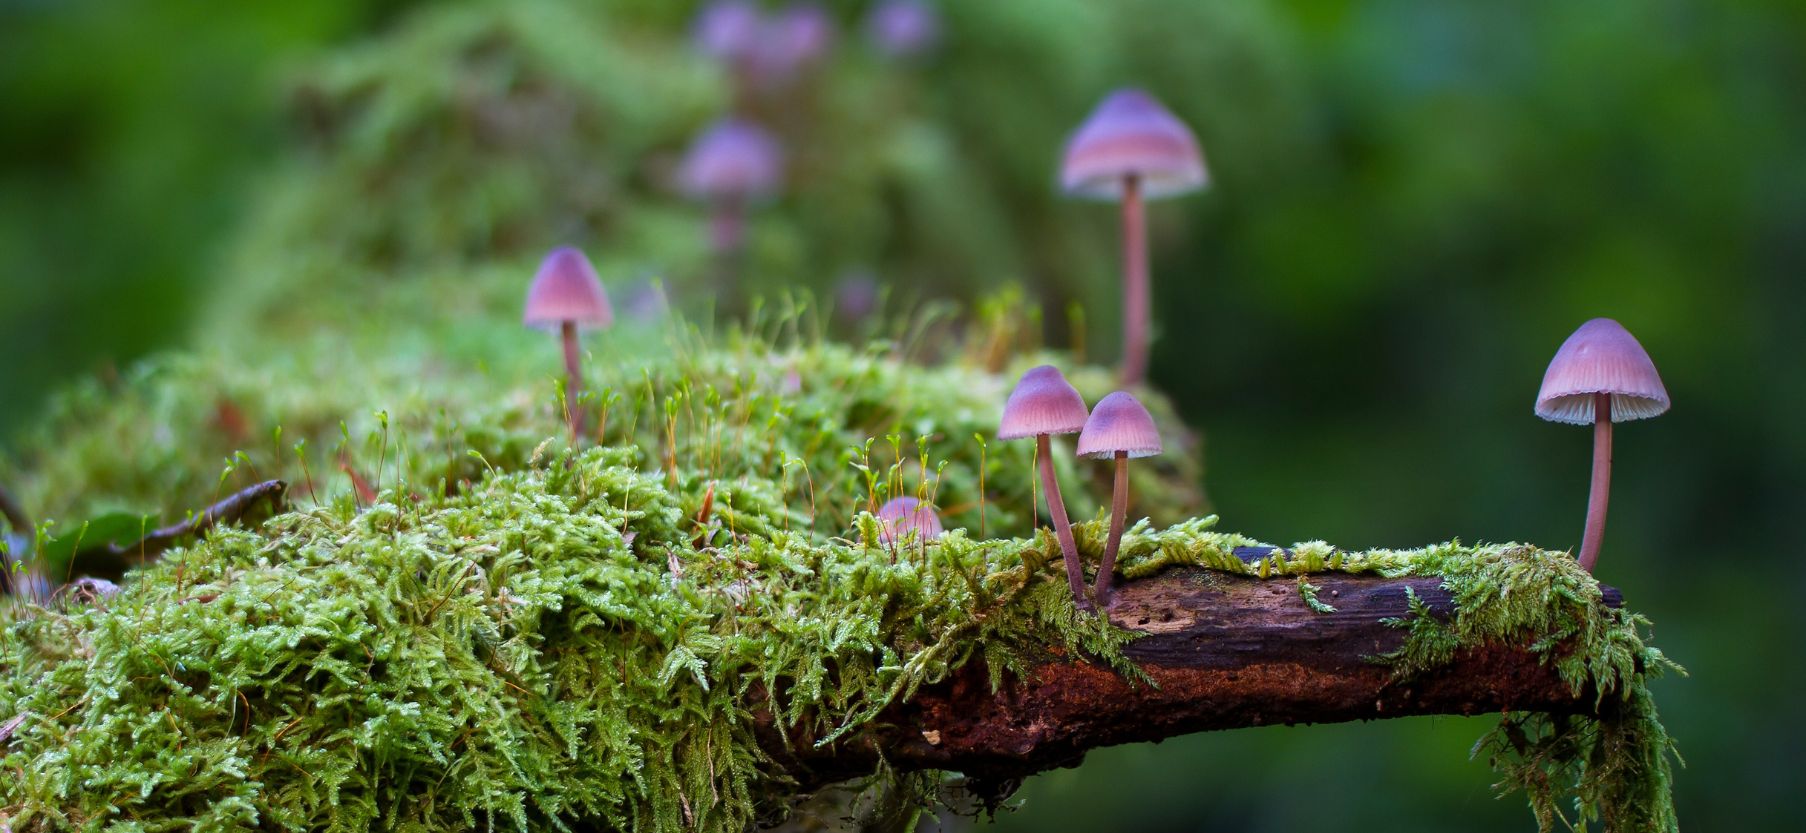 functional mushrooms vs. psychedelic mushrooms